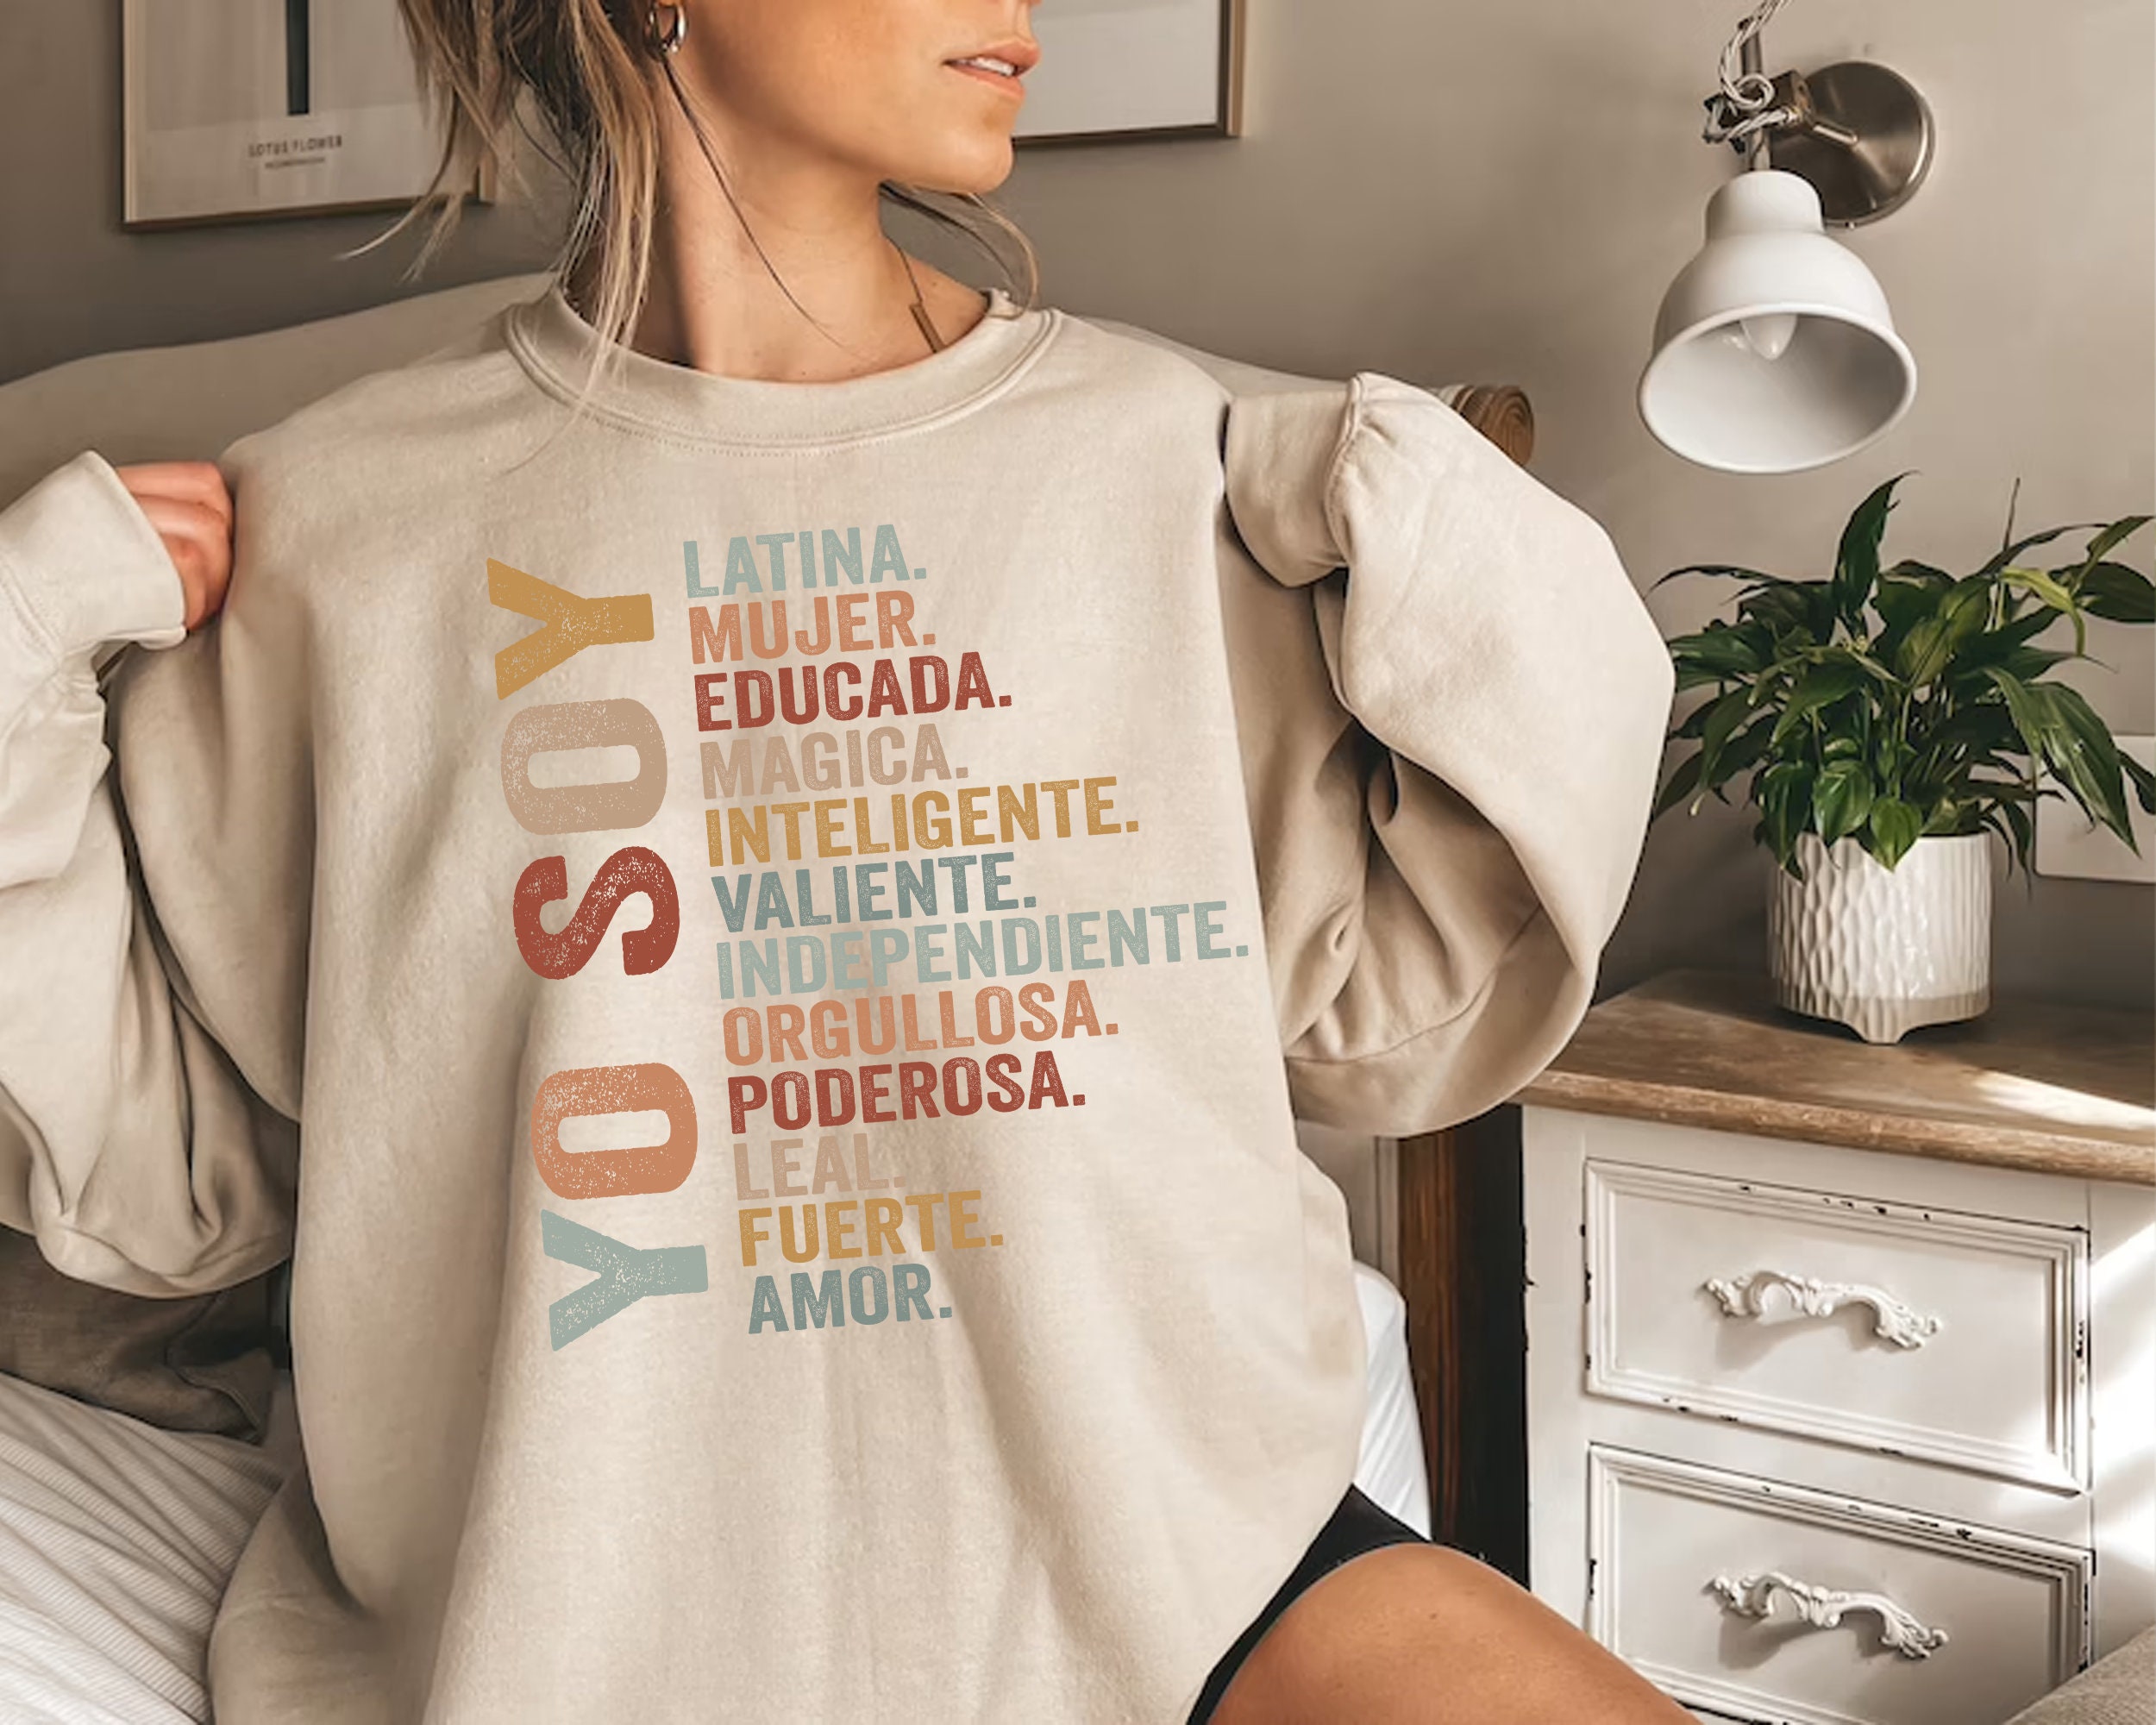 Yo Soy La Morsa | Essential T-Shirt